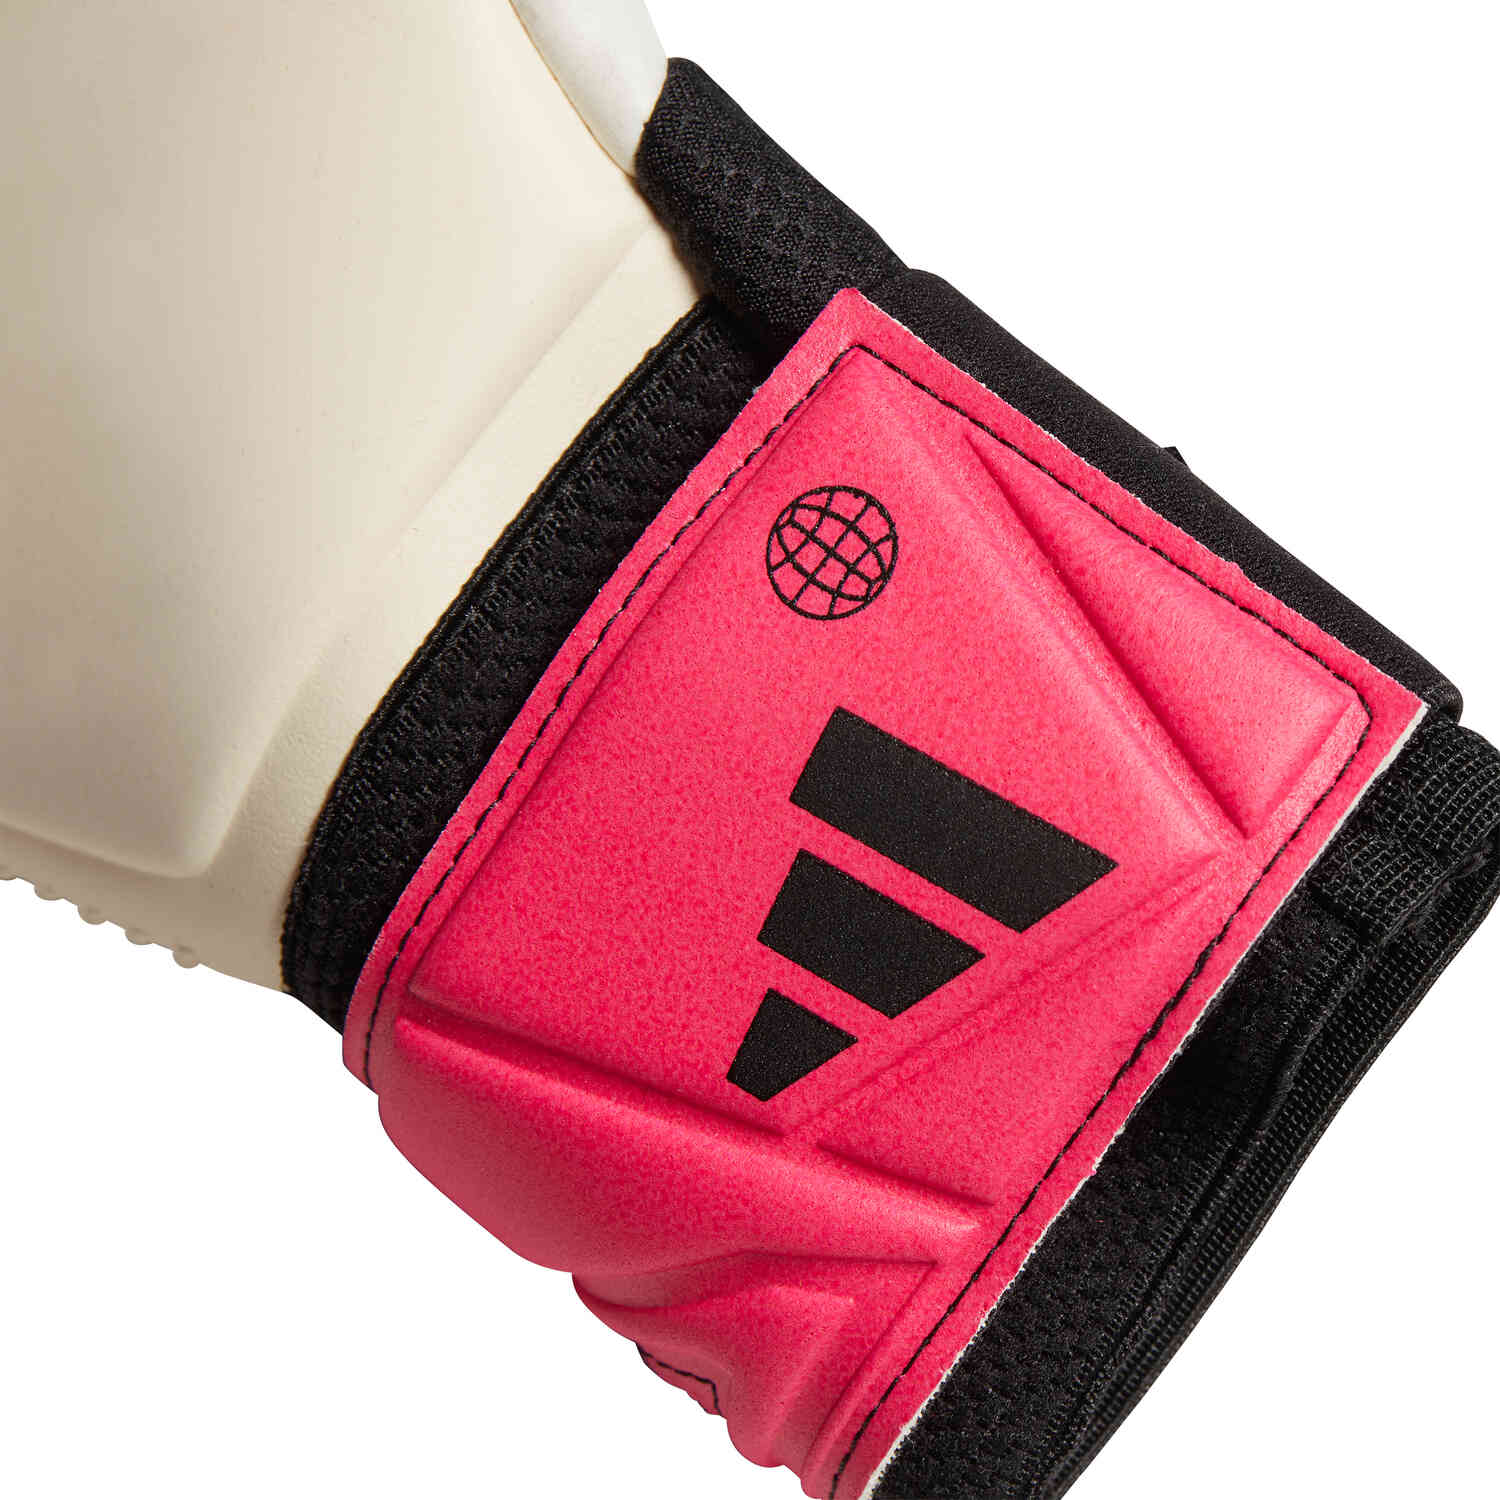 Kids adidas Predator Pro Goalkeeper Gloves – Own Your Football Pack